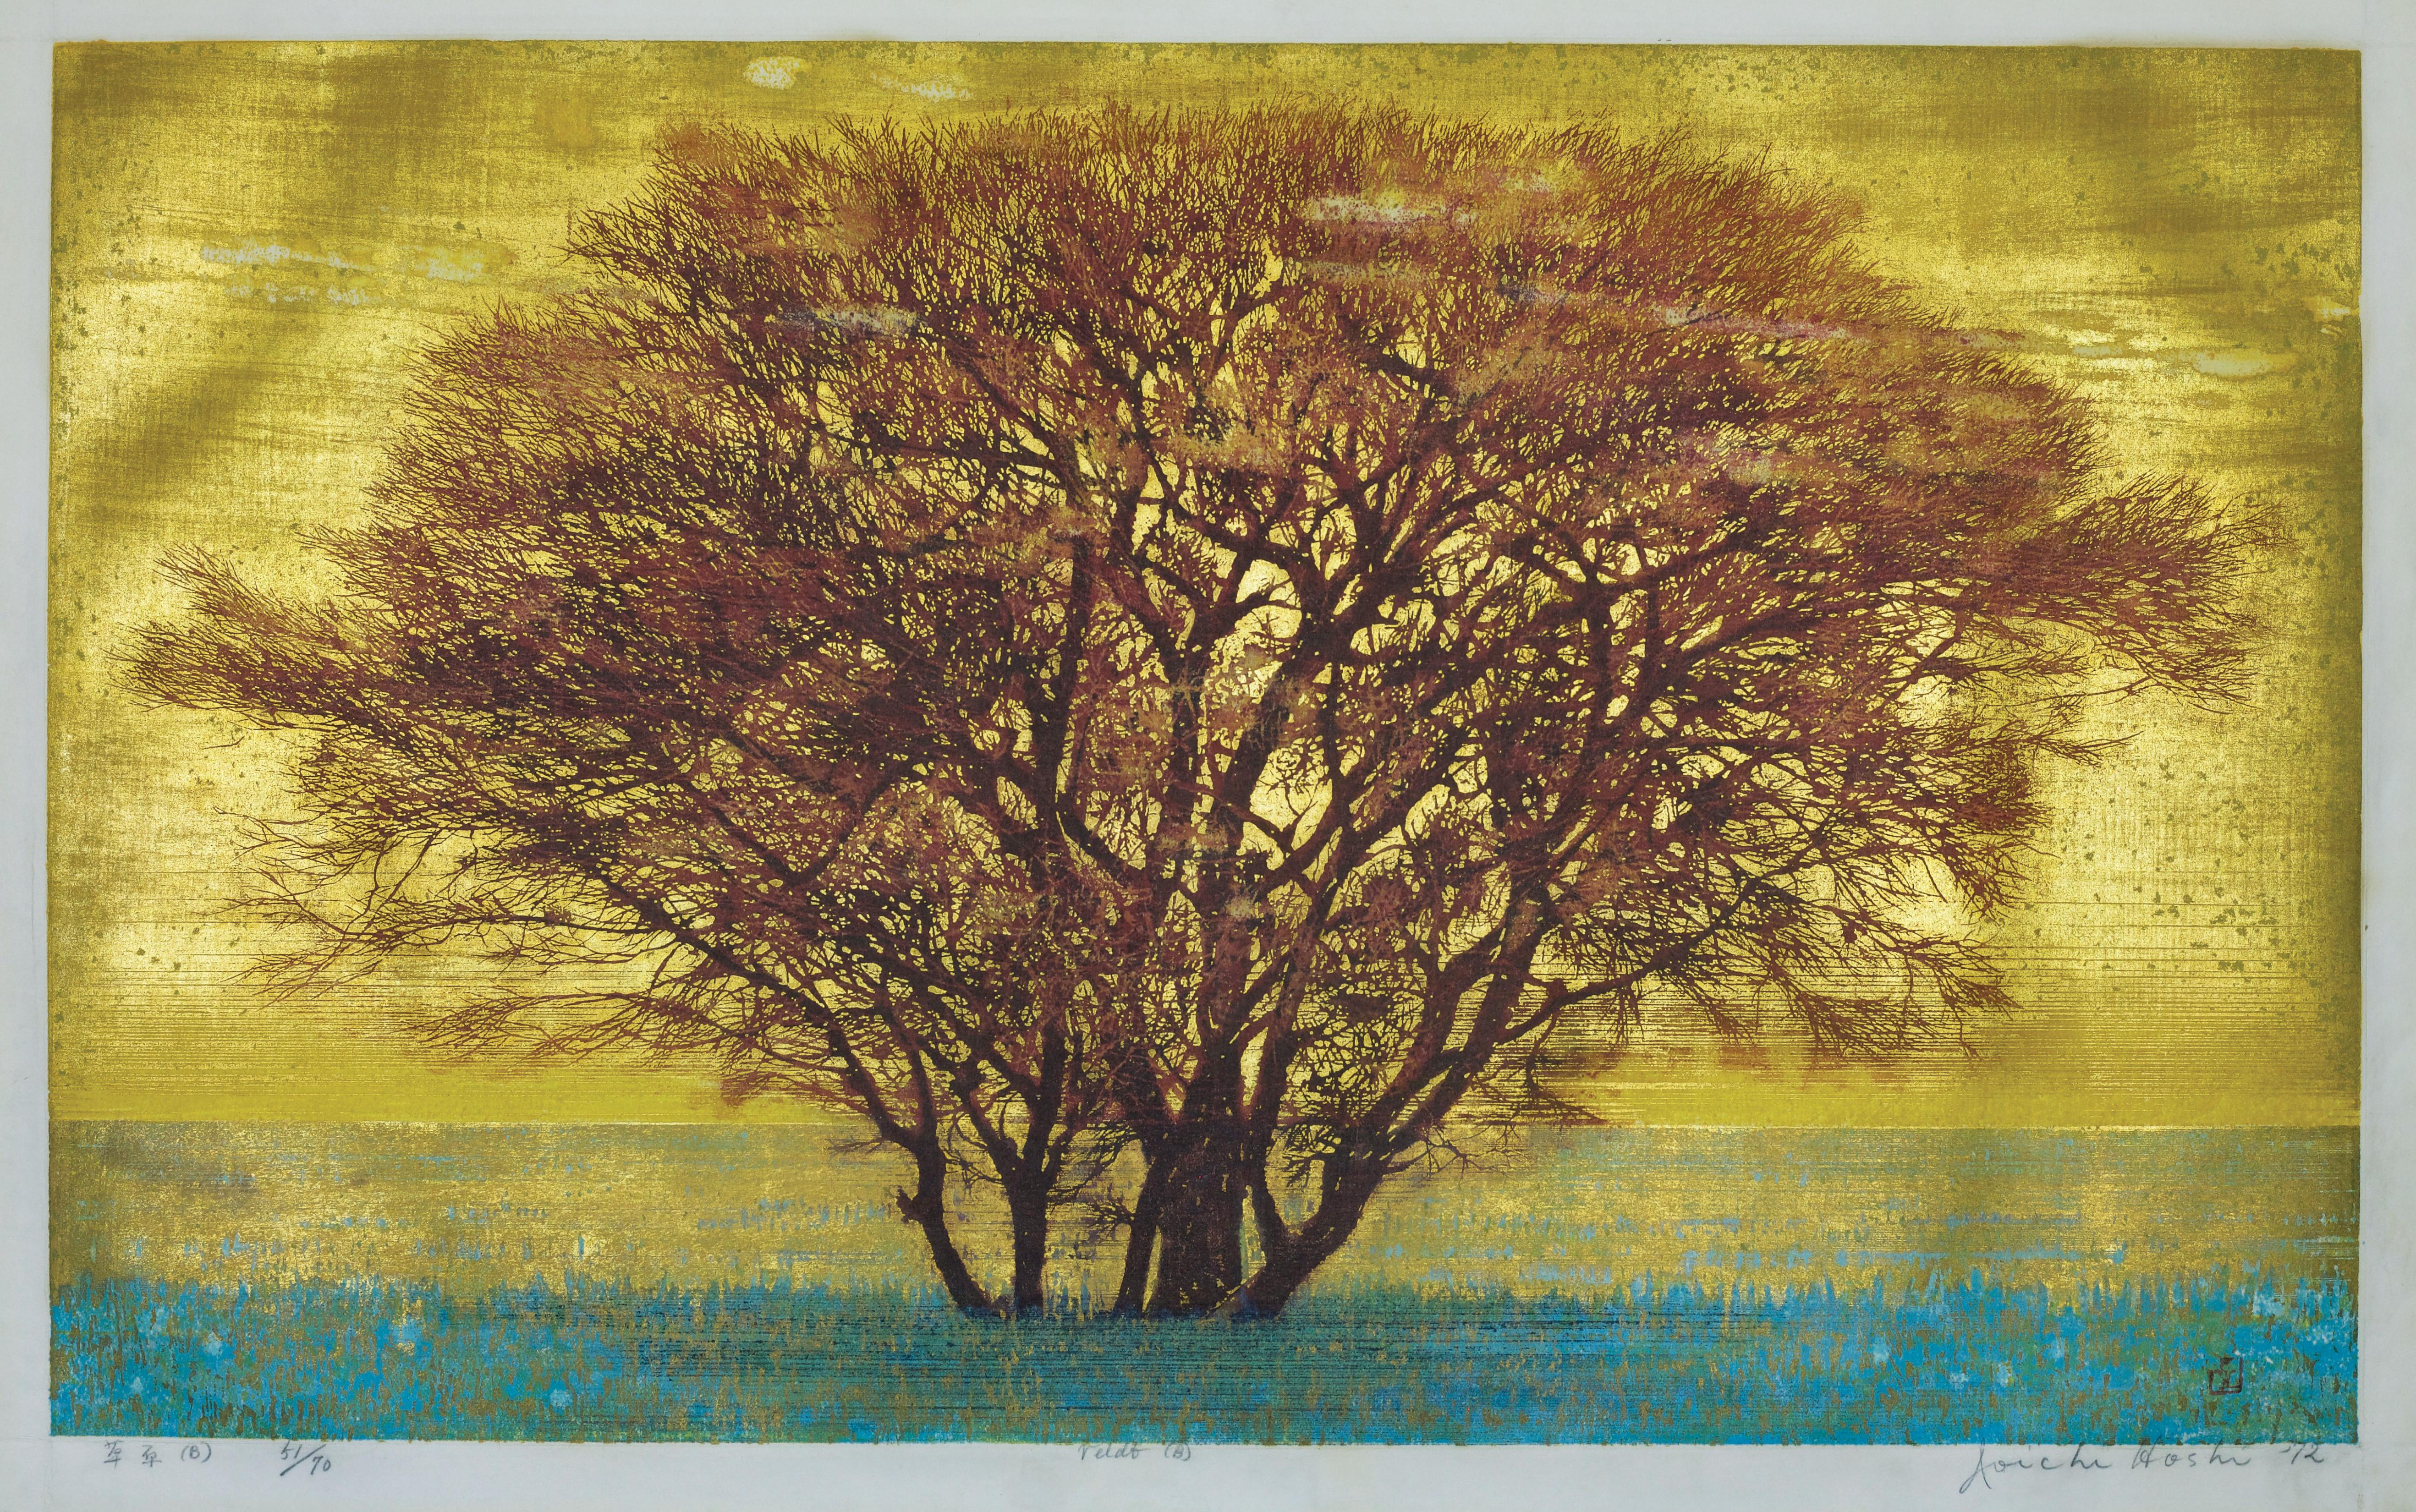 Joichi Hoshi Landscape Print - Massive Red Tree Against Golden Ground: Green Field (Veldt) (B)